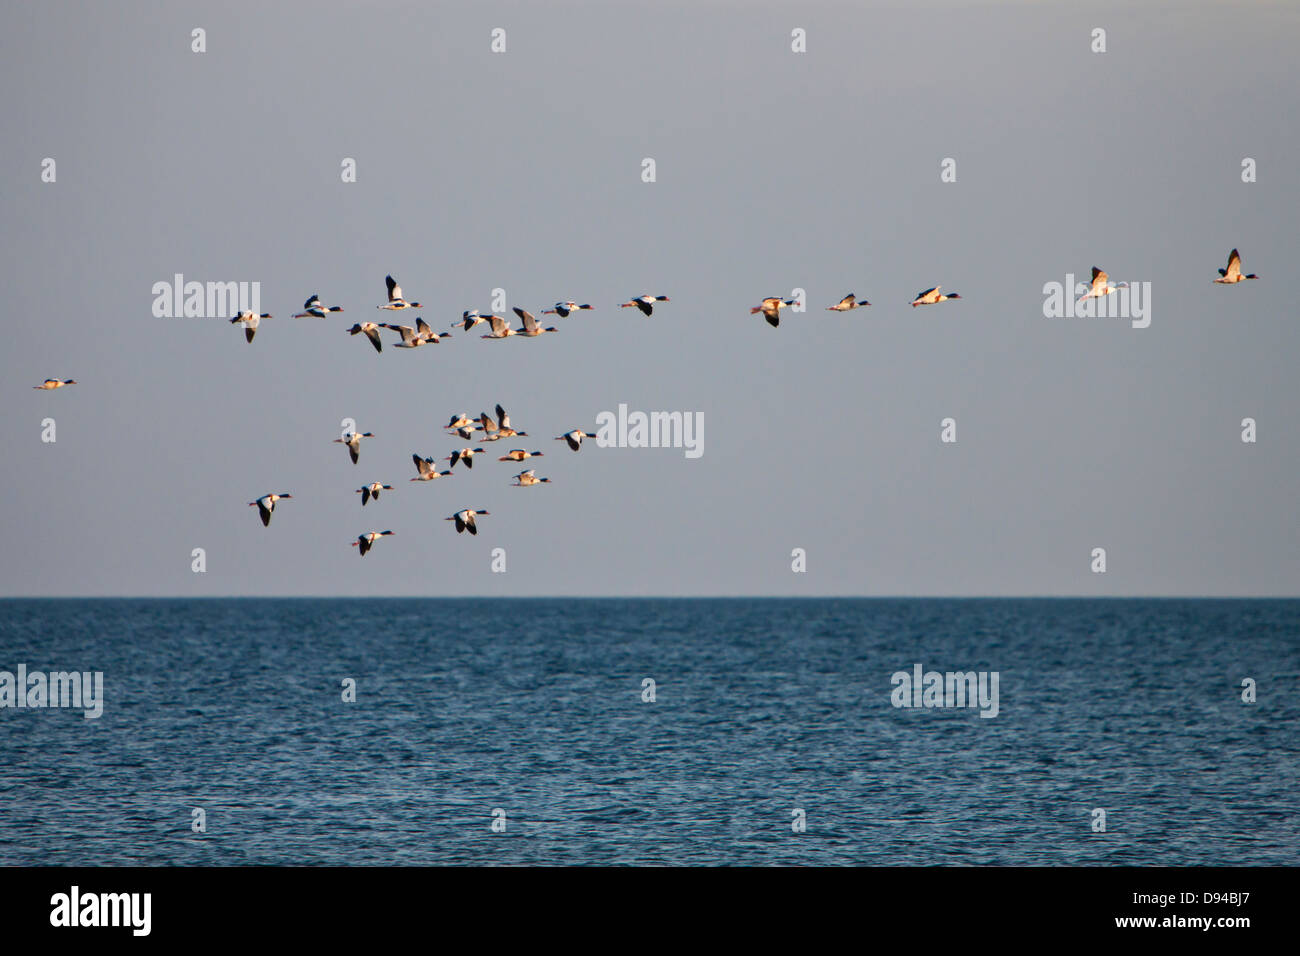 Flock of ducks flying above sea Stock Photo